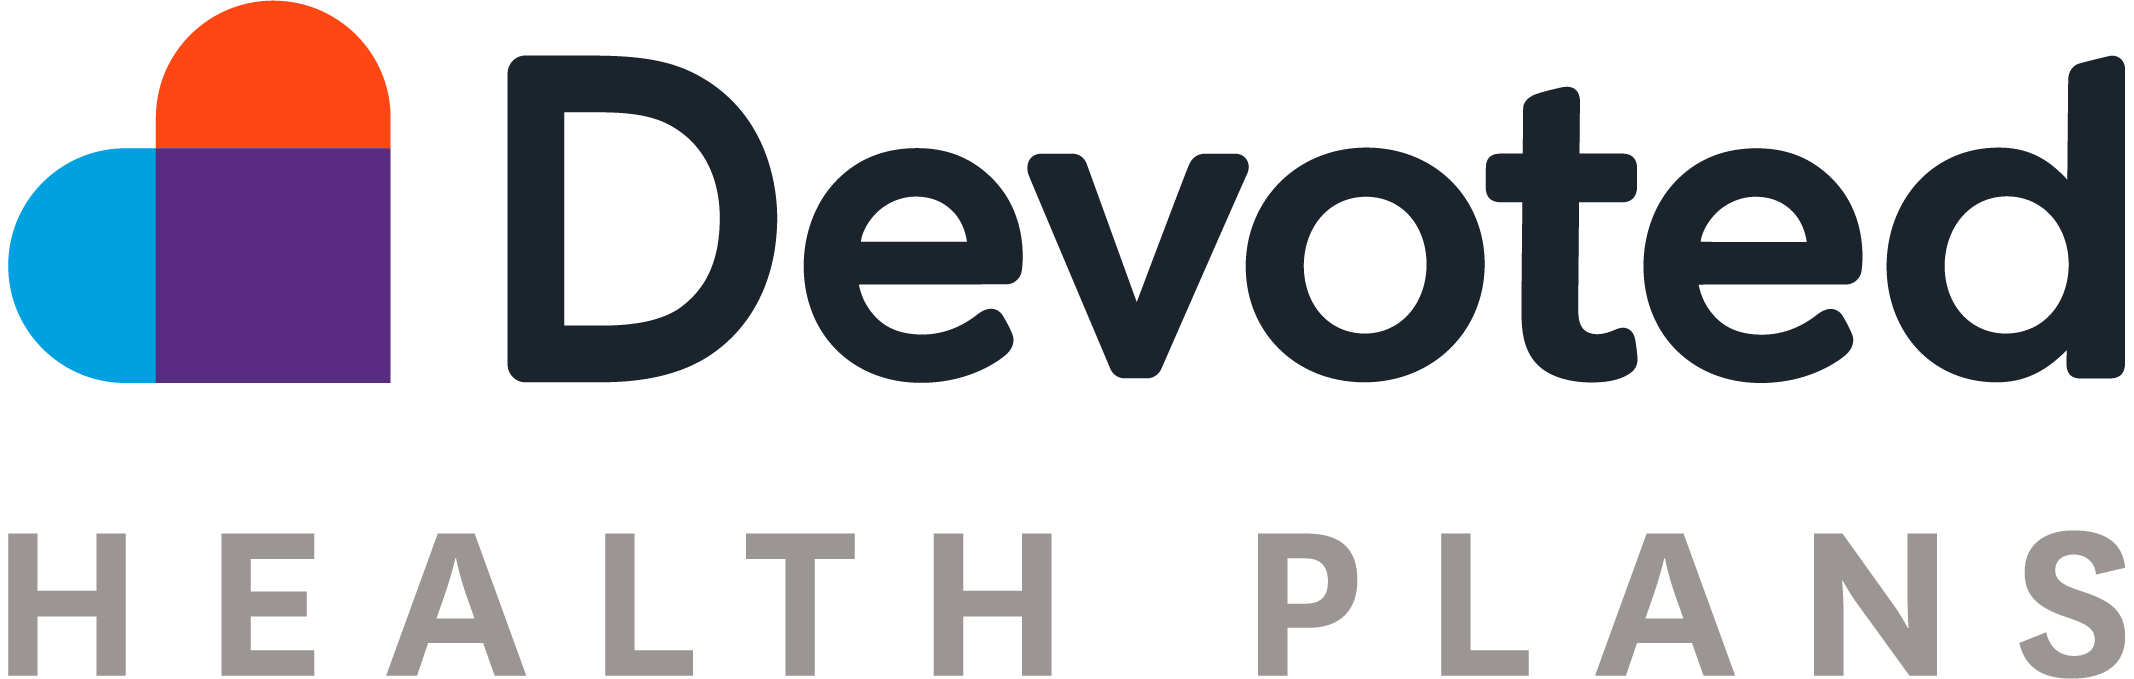 Devoted Health Plans Logo